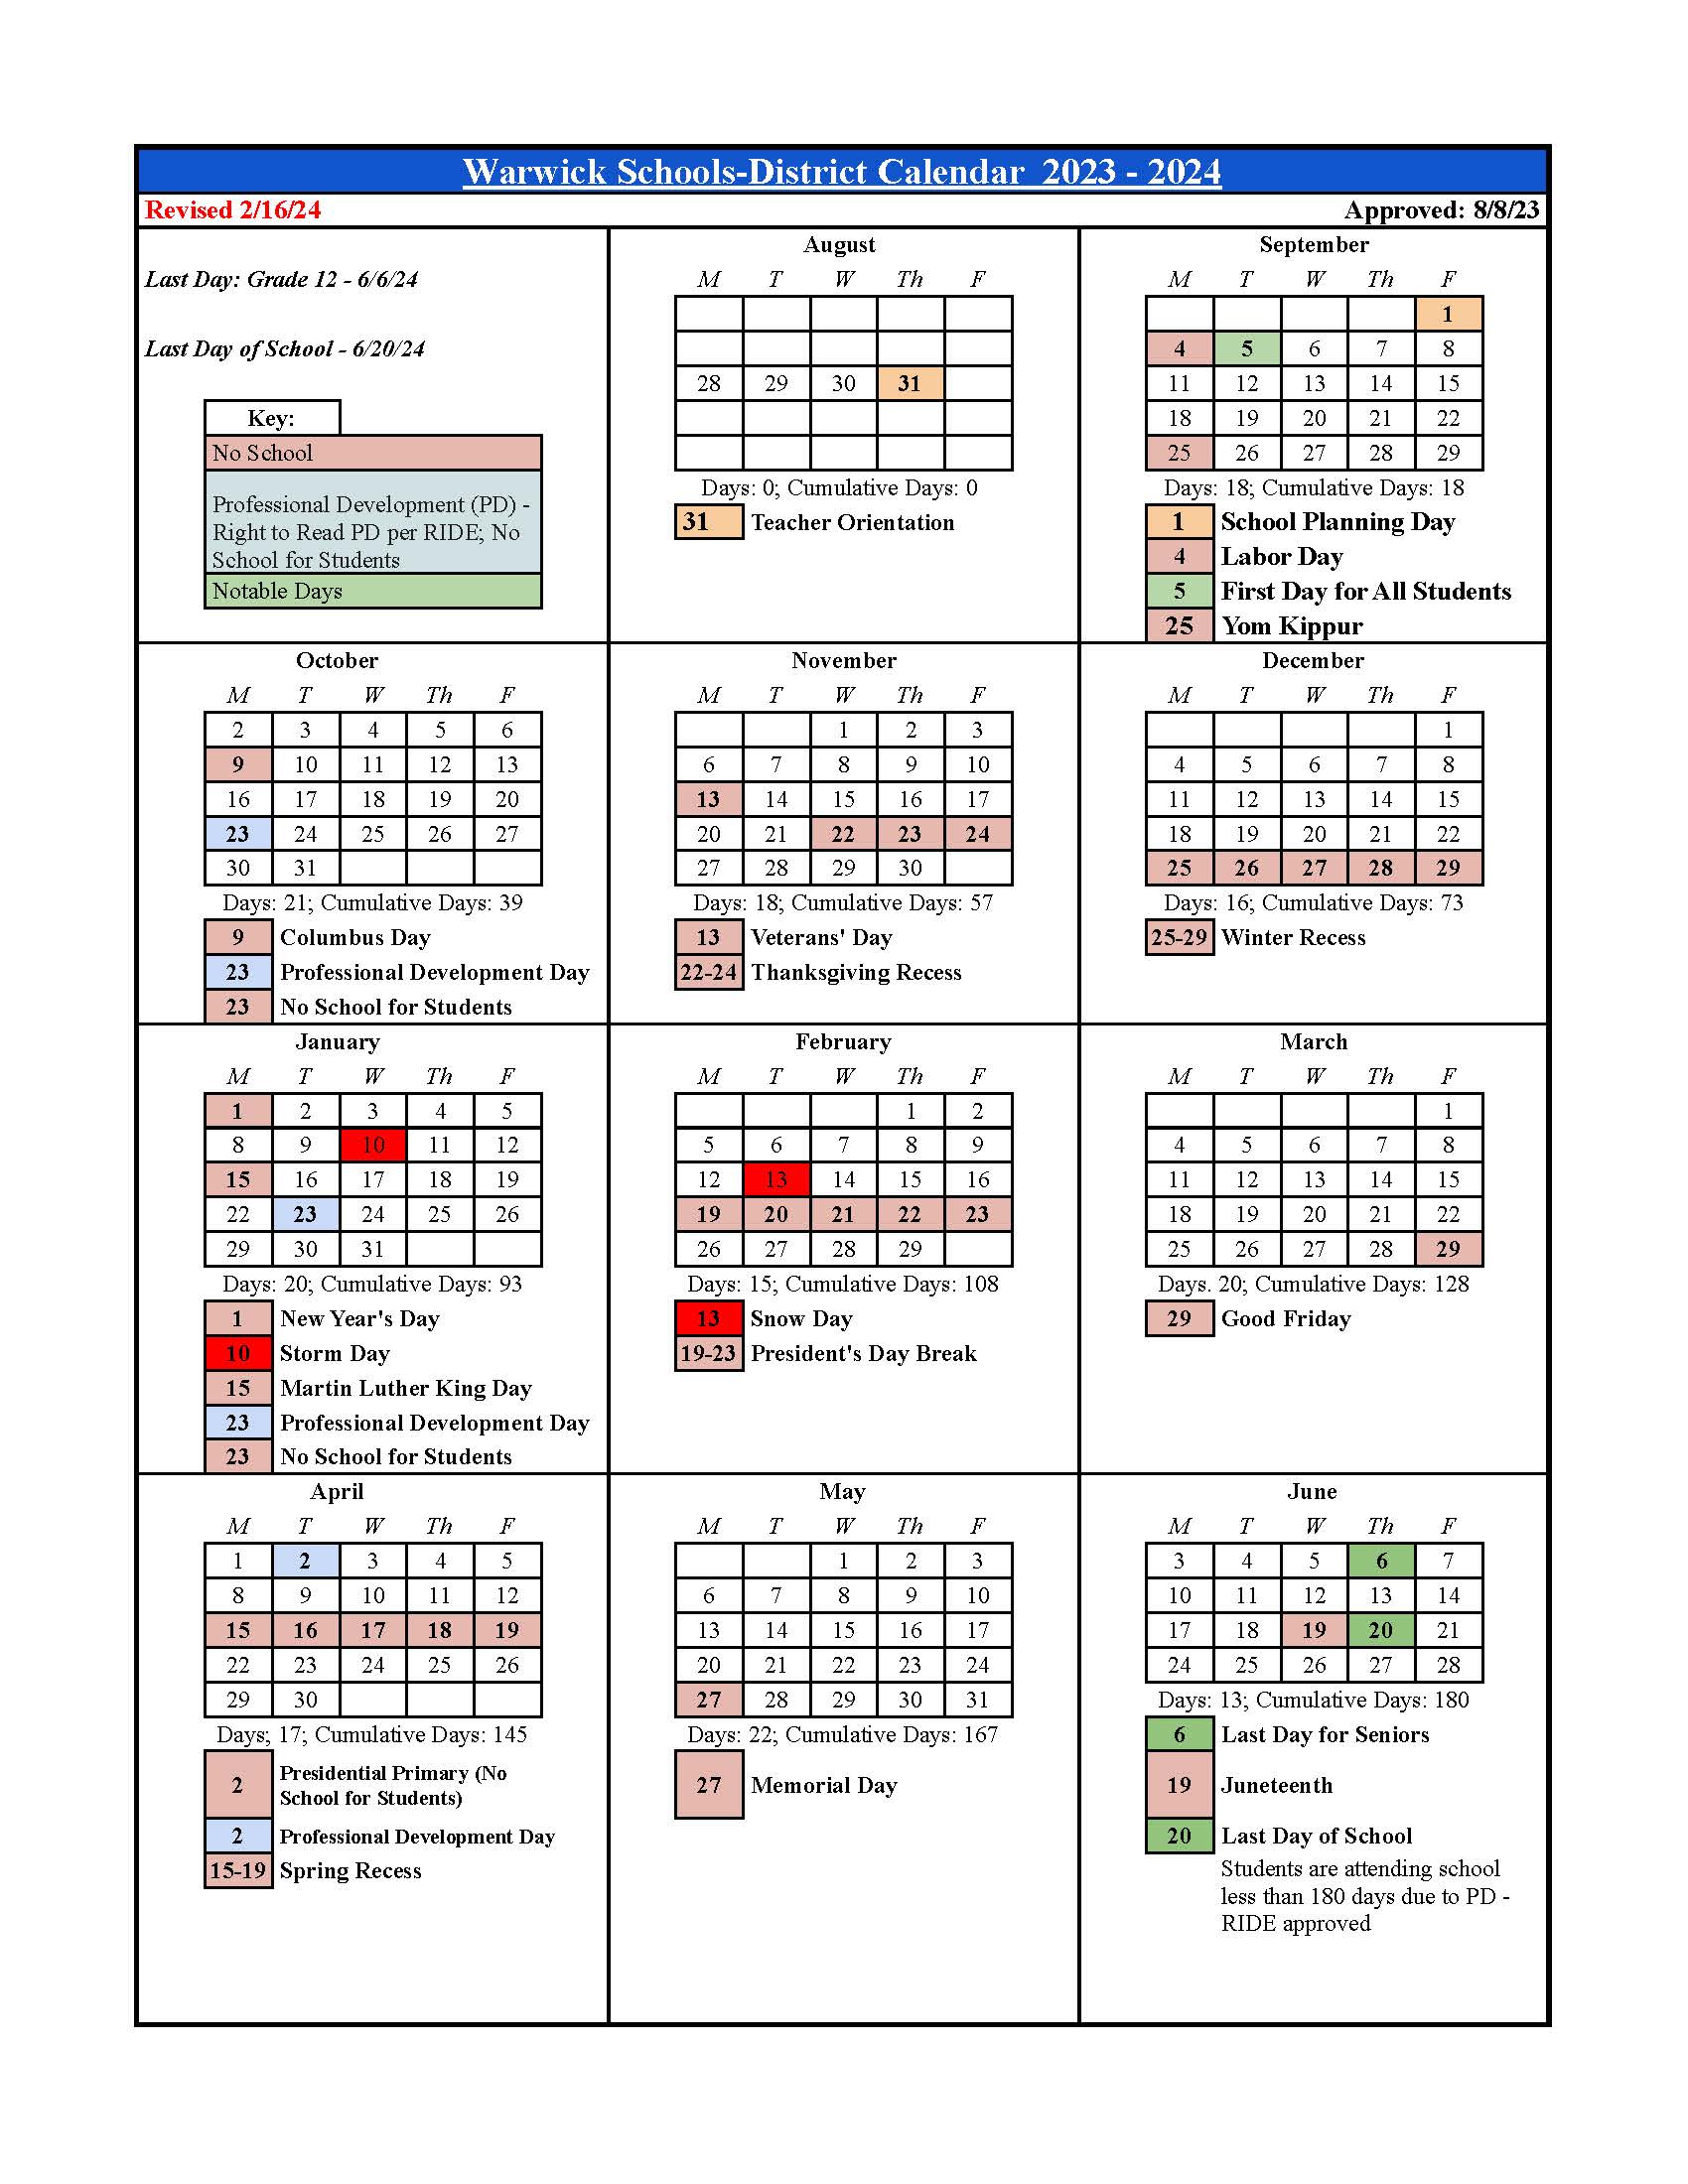 REVISED 2.16.24 District Calendar